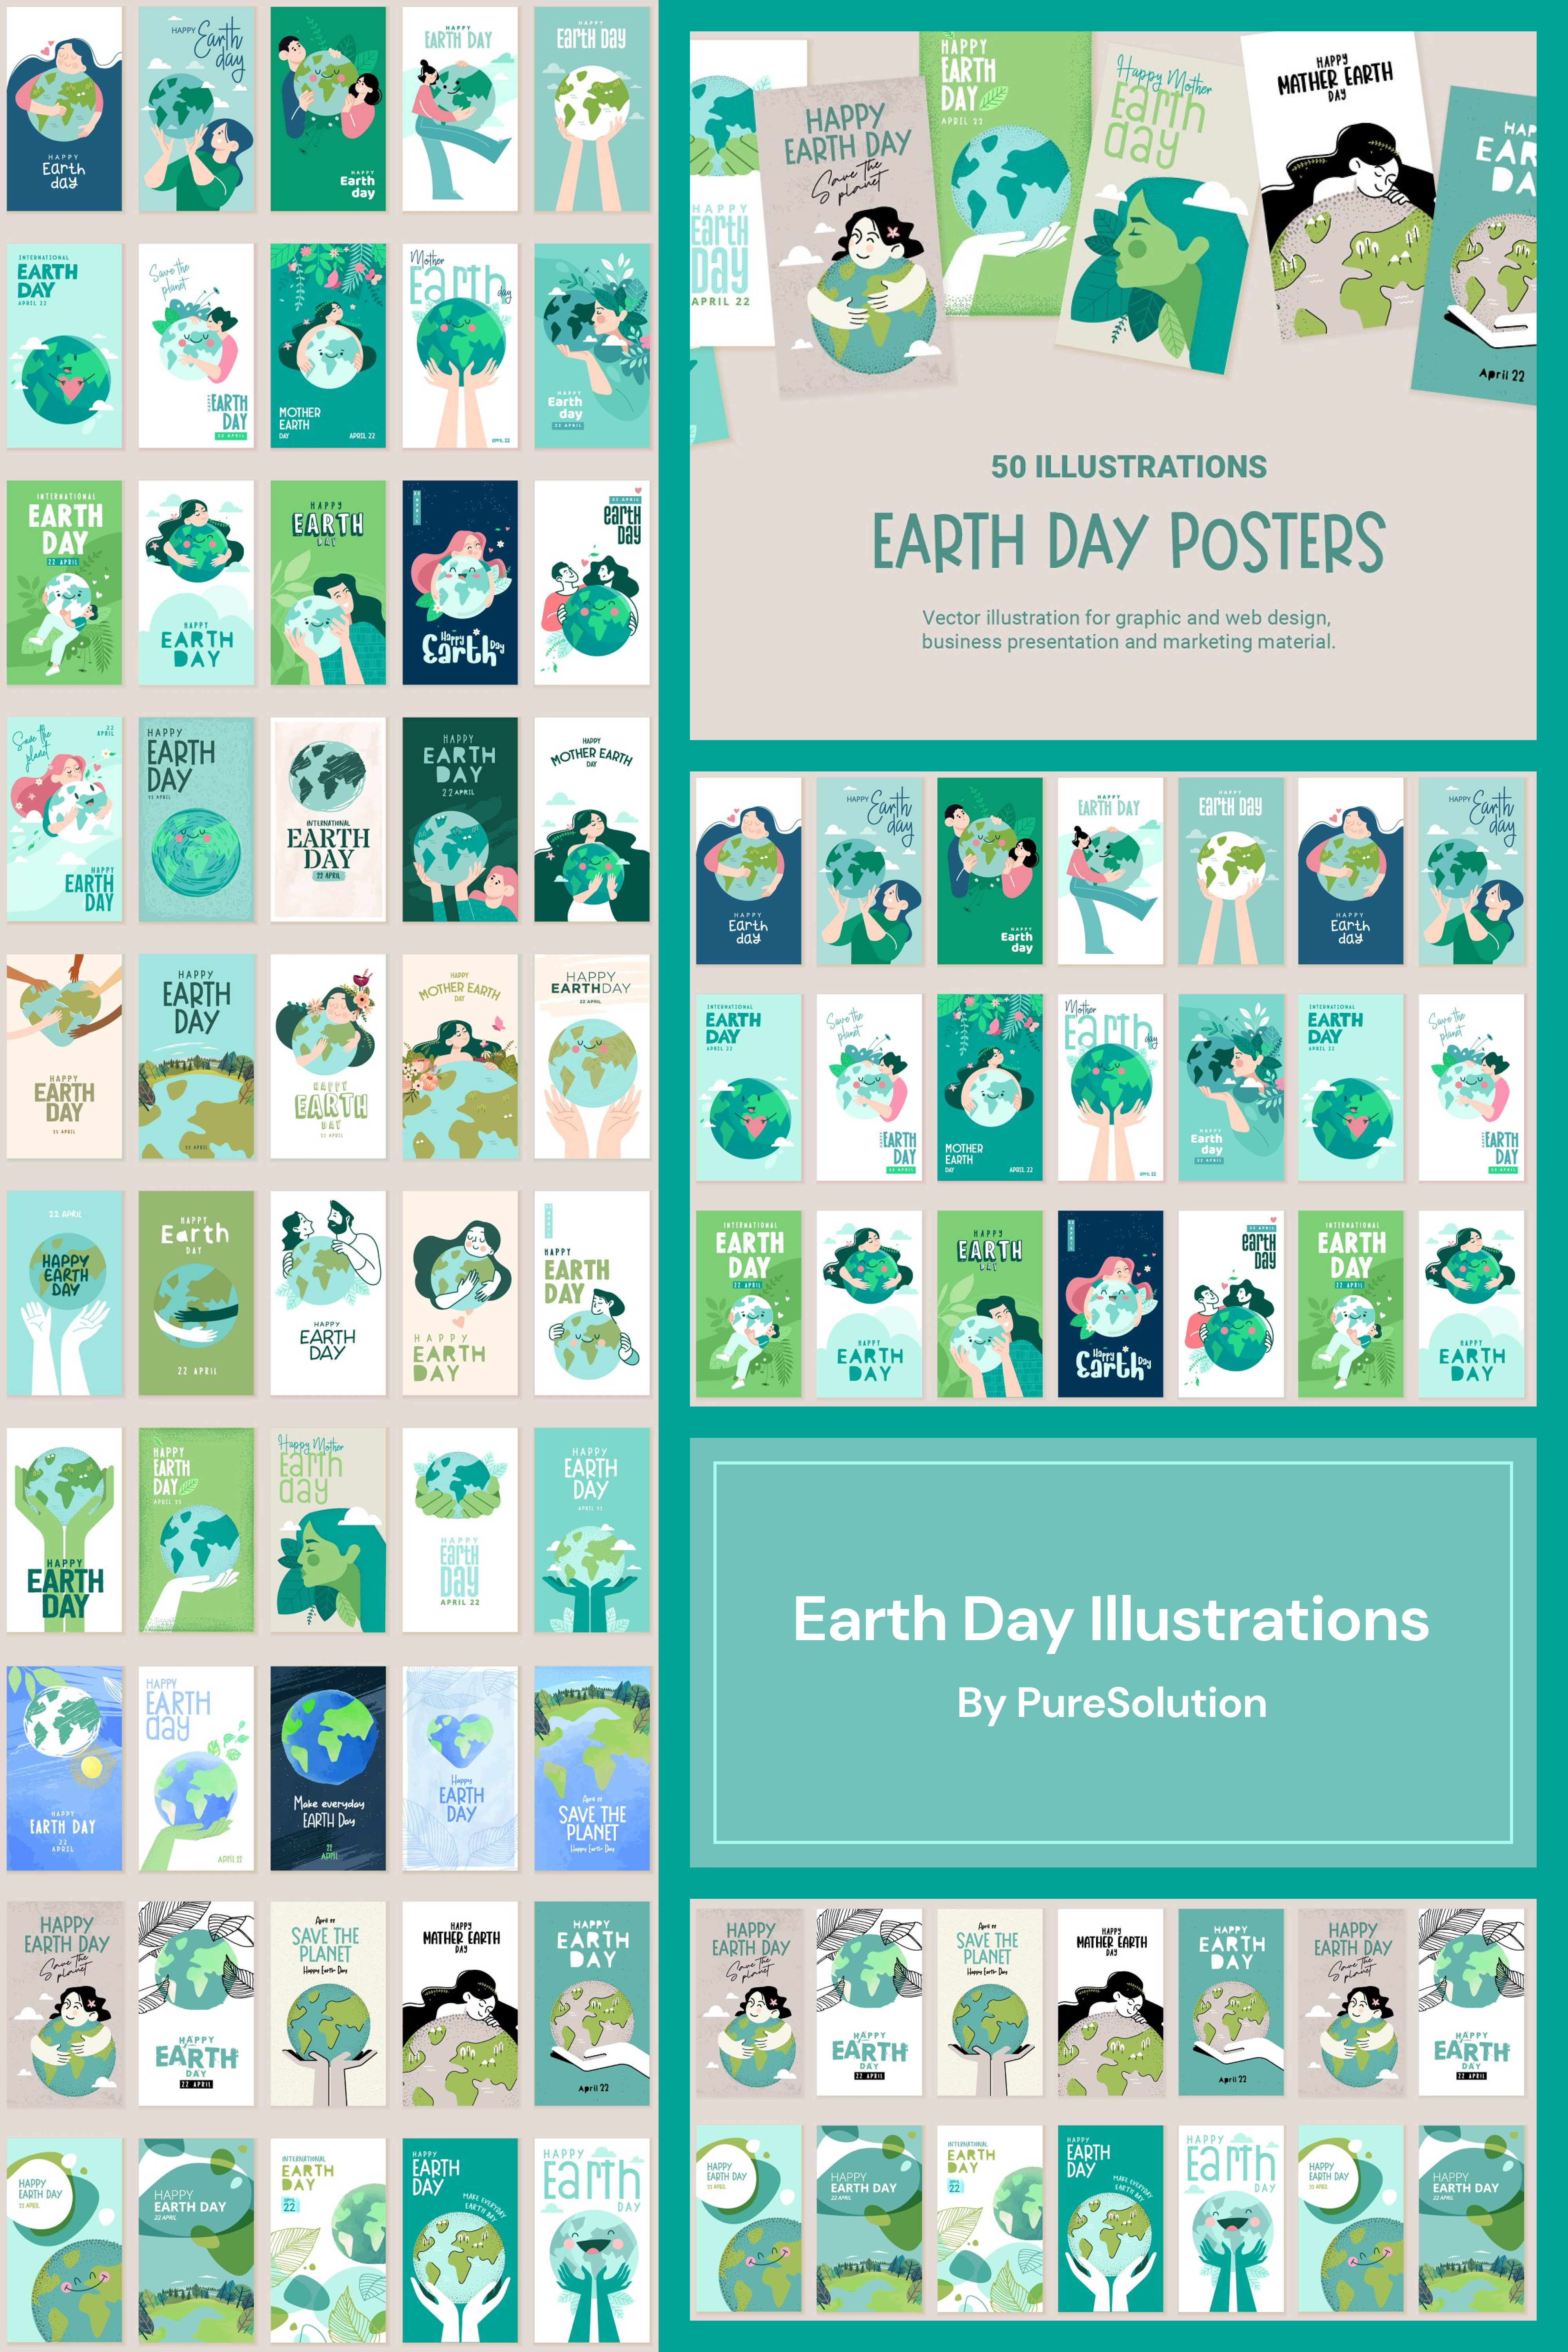 Pinterest illustrations of earth day illustrations.